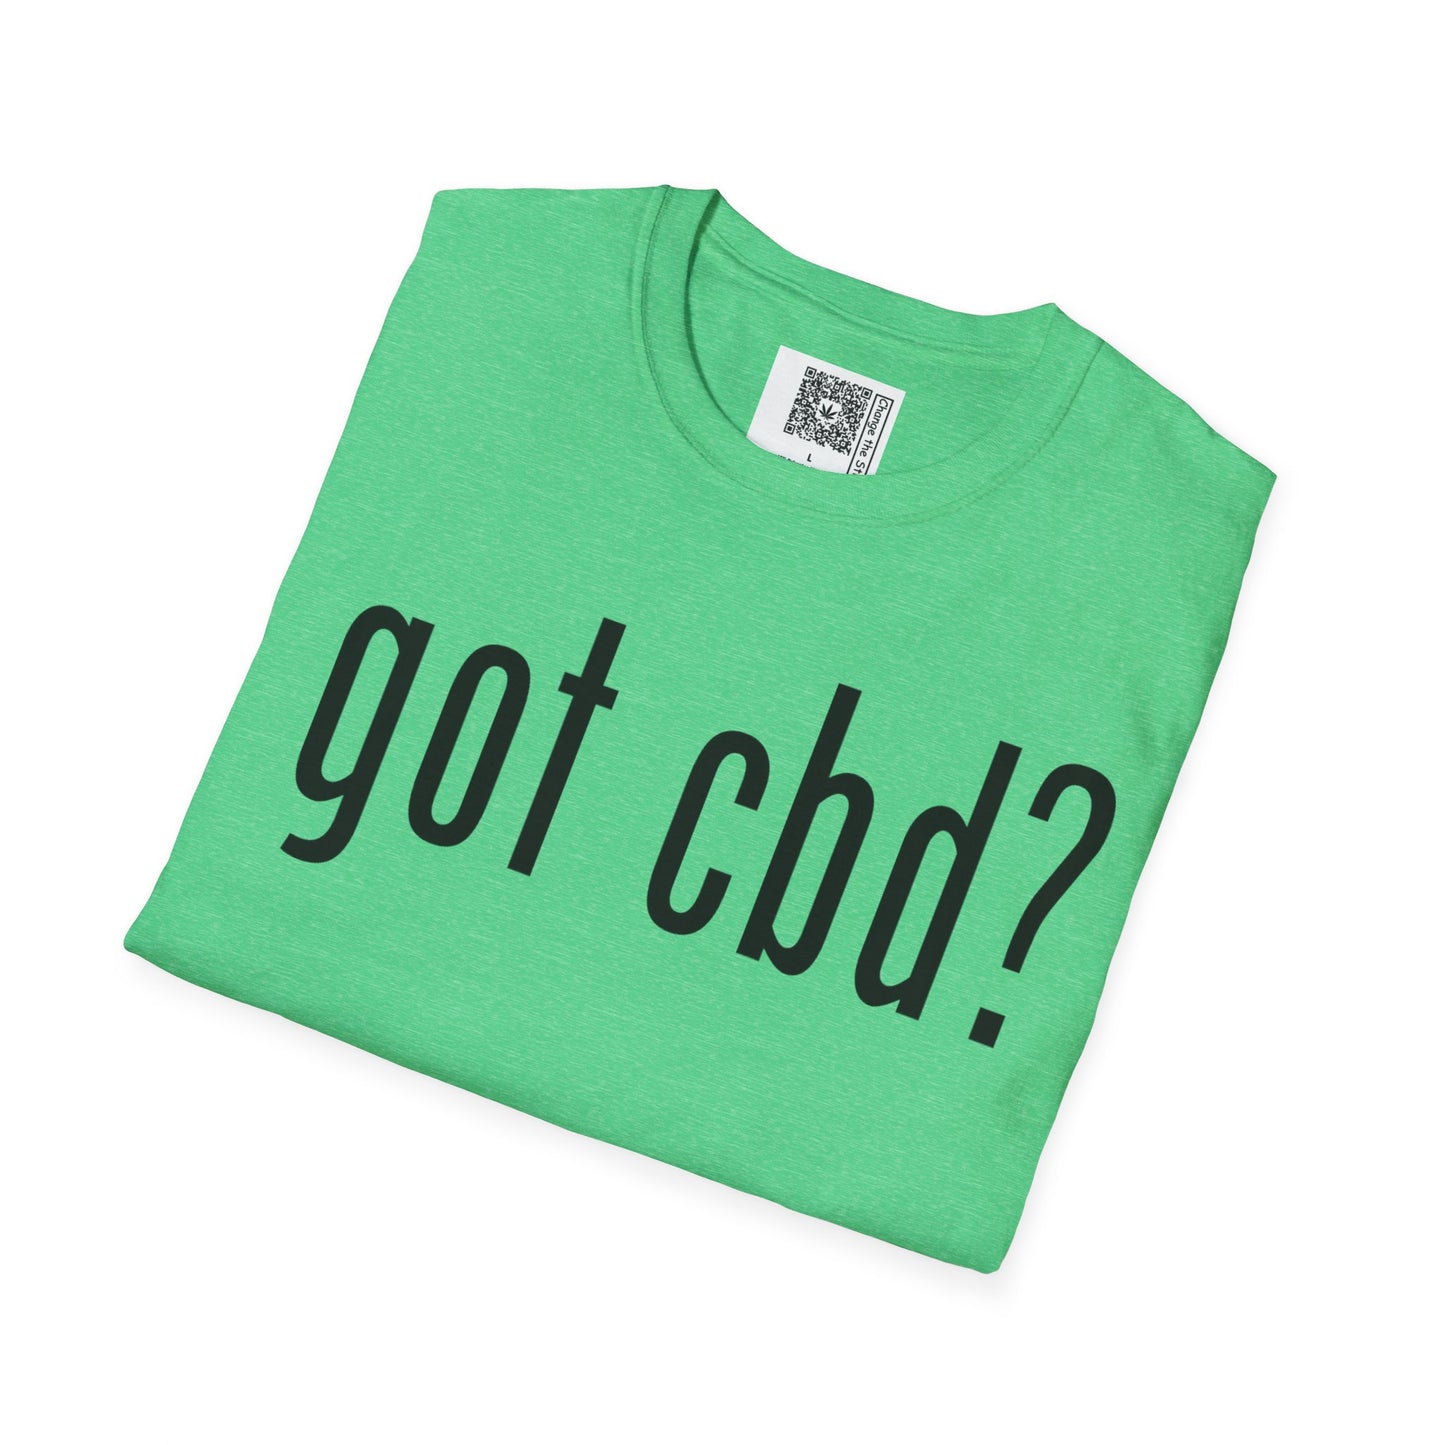 Change the Stigma GOT CBD Weed Shirt